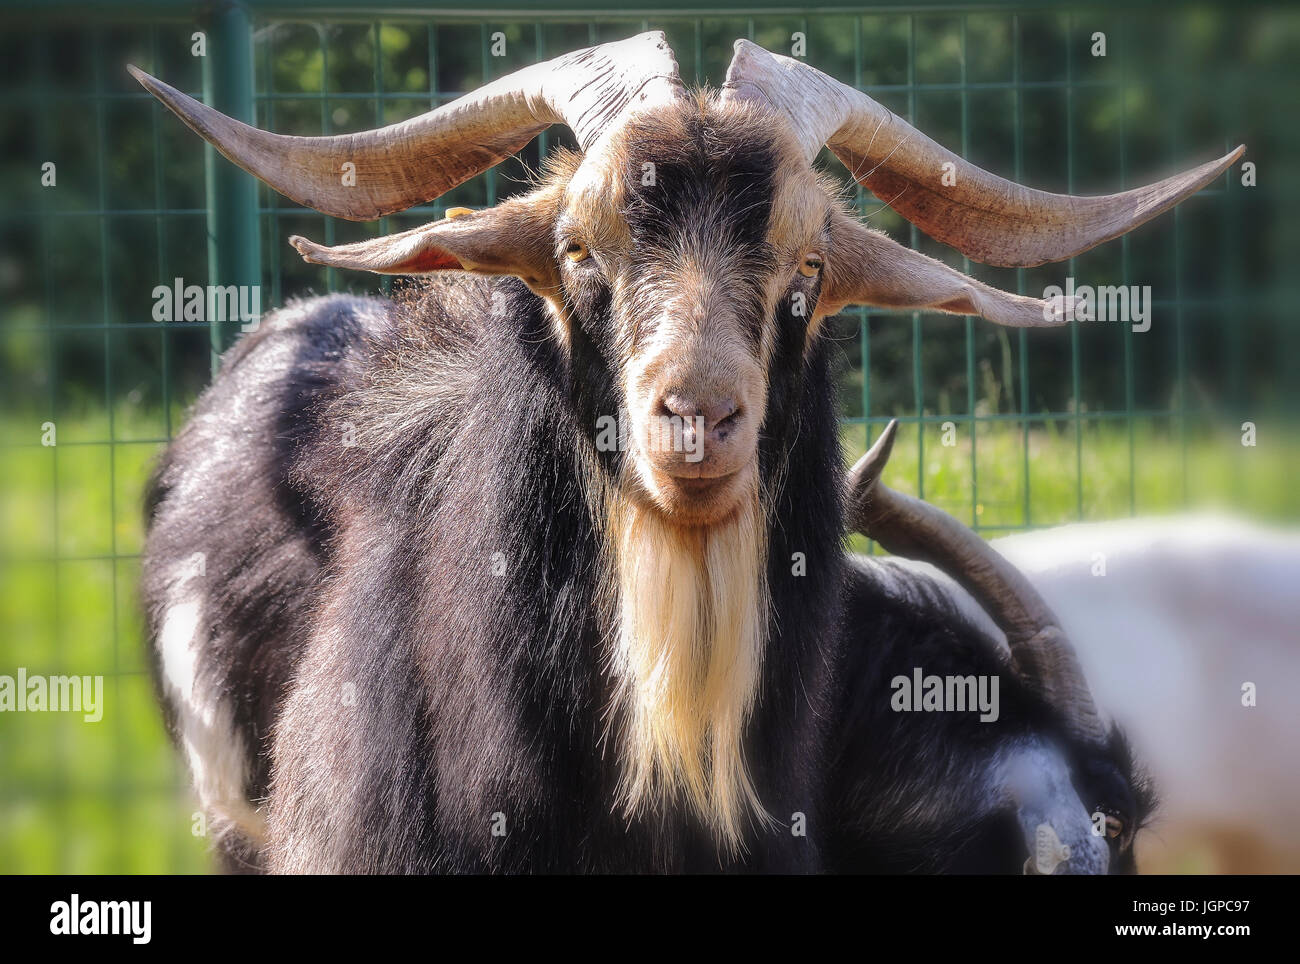 Billy goat portrait Stock Photo